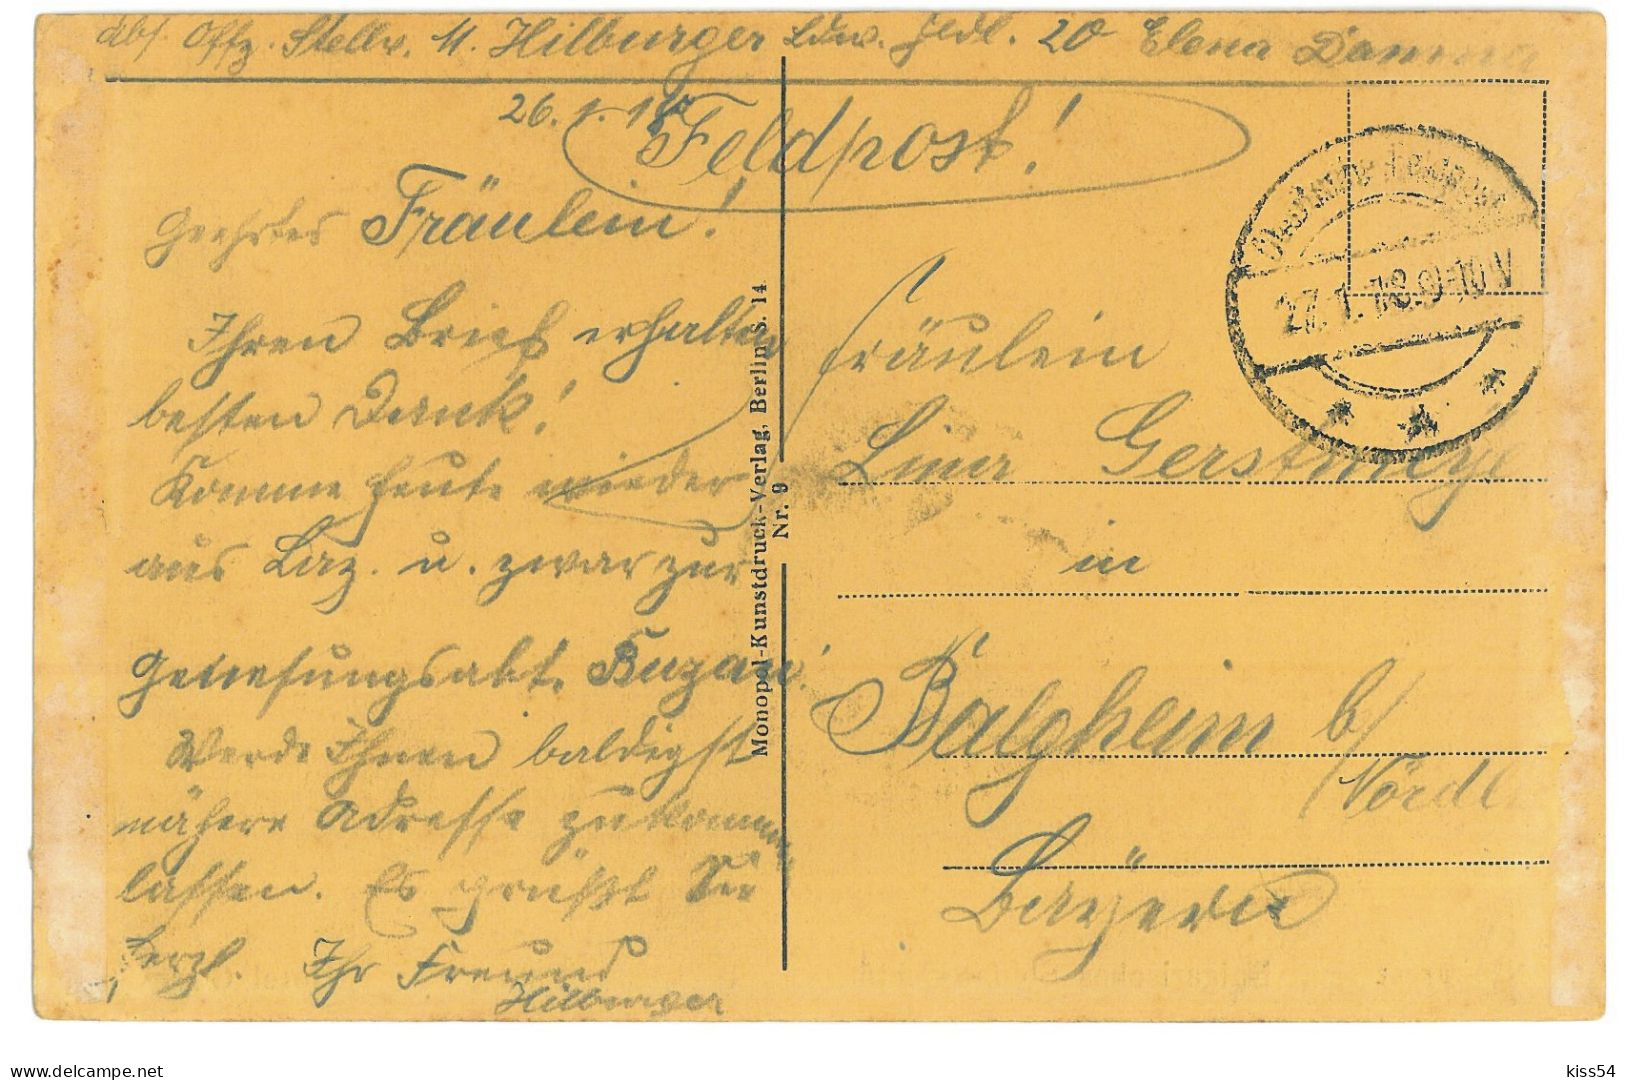 RO 91 - 21222 BUCURESTI, Hotel Capsa, Romania - old postcard, CENSOR - used - 1918